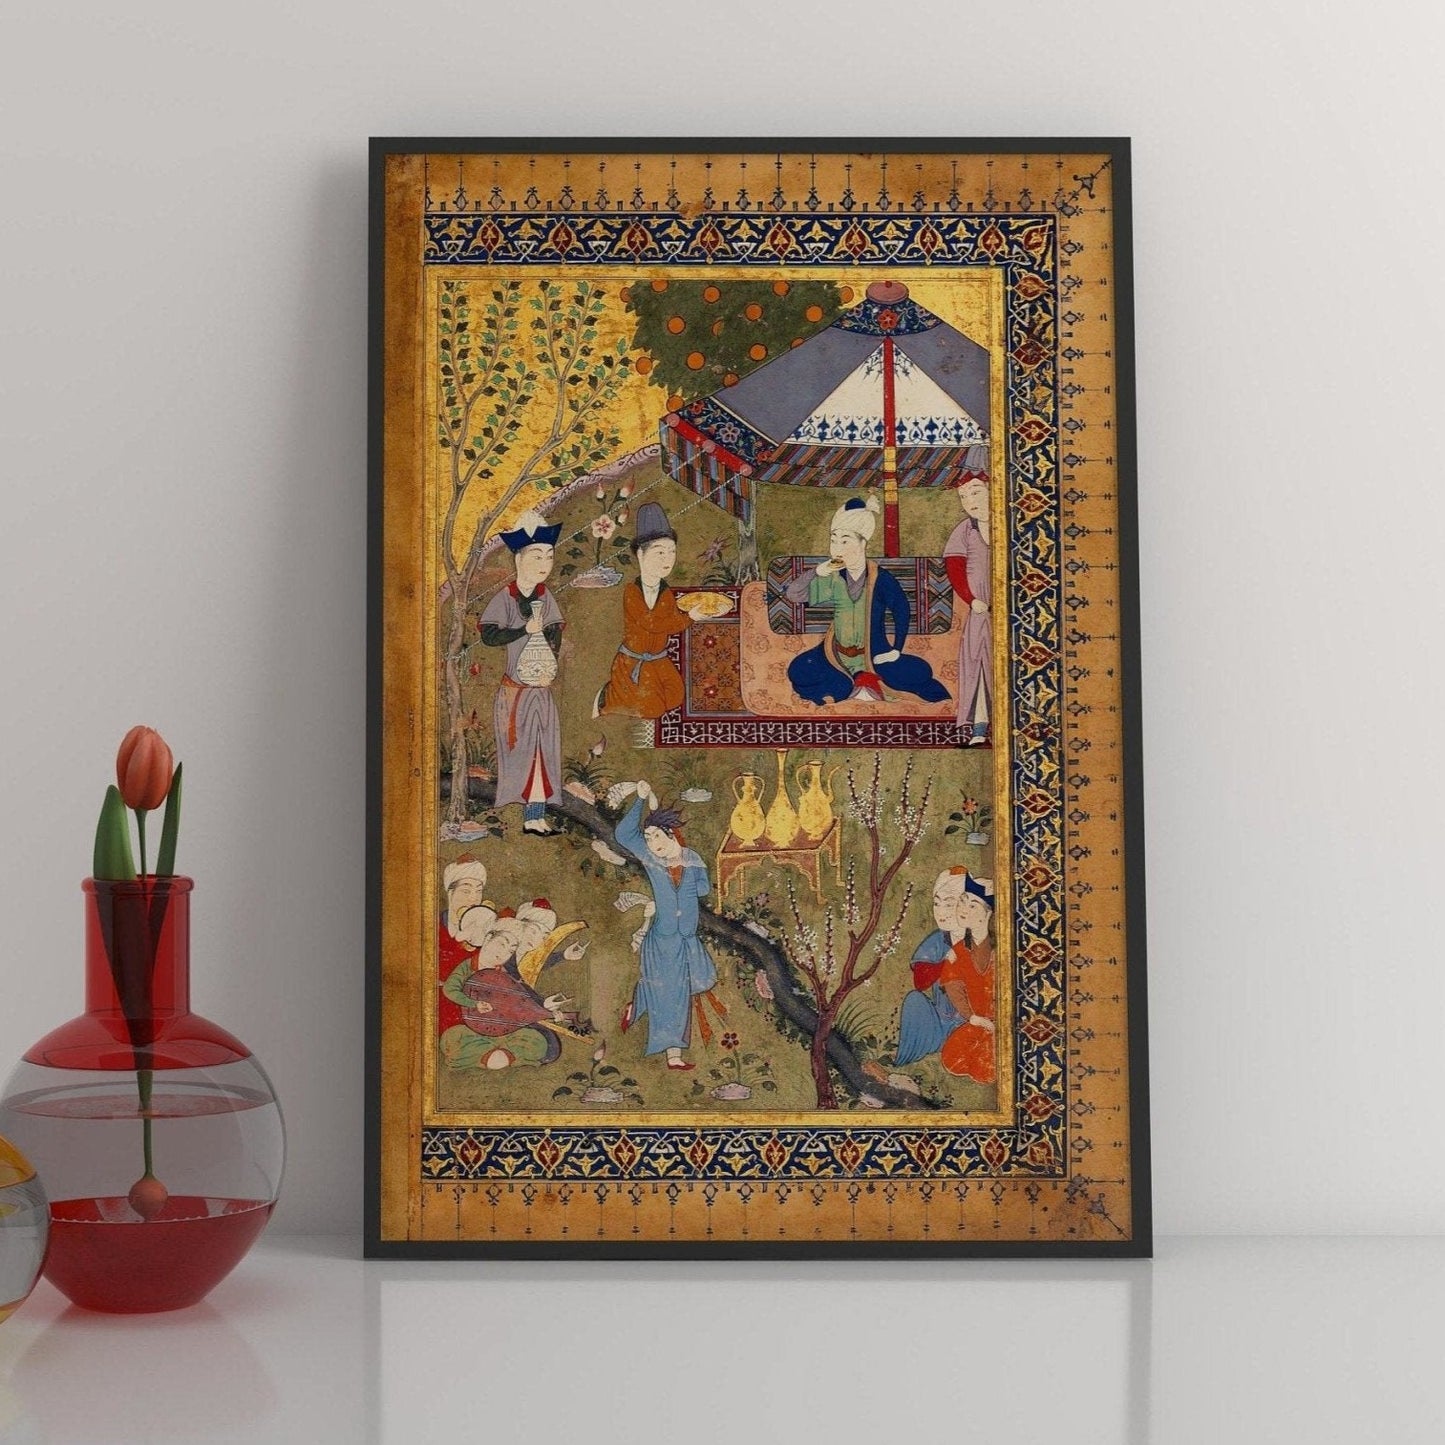 La cour de Pir Budaq (art miniature persan traditionnel)